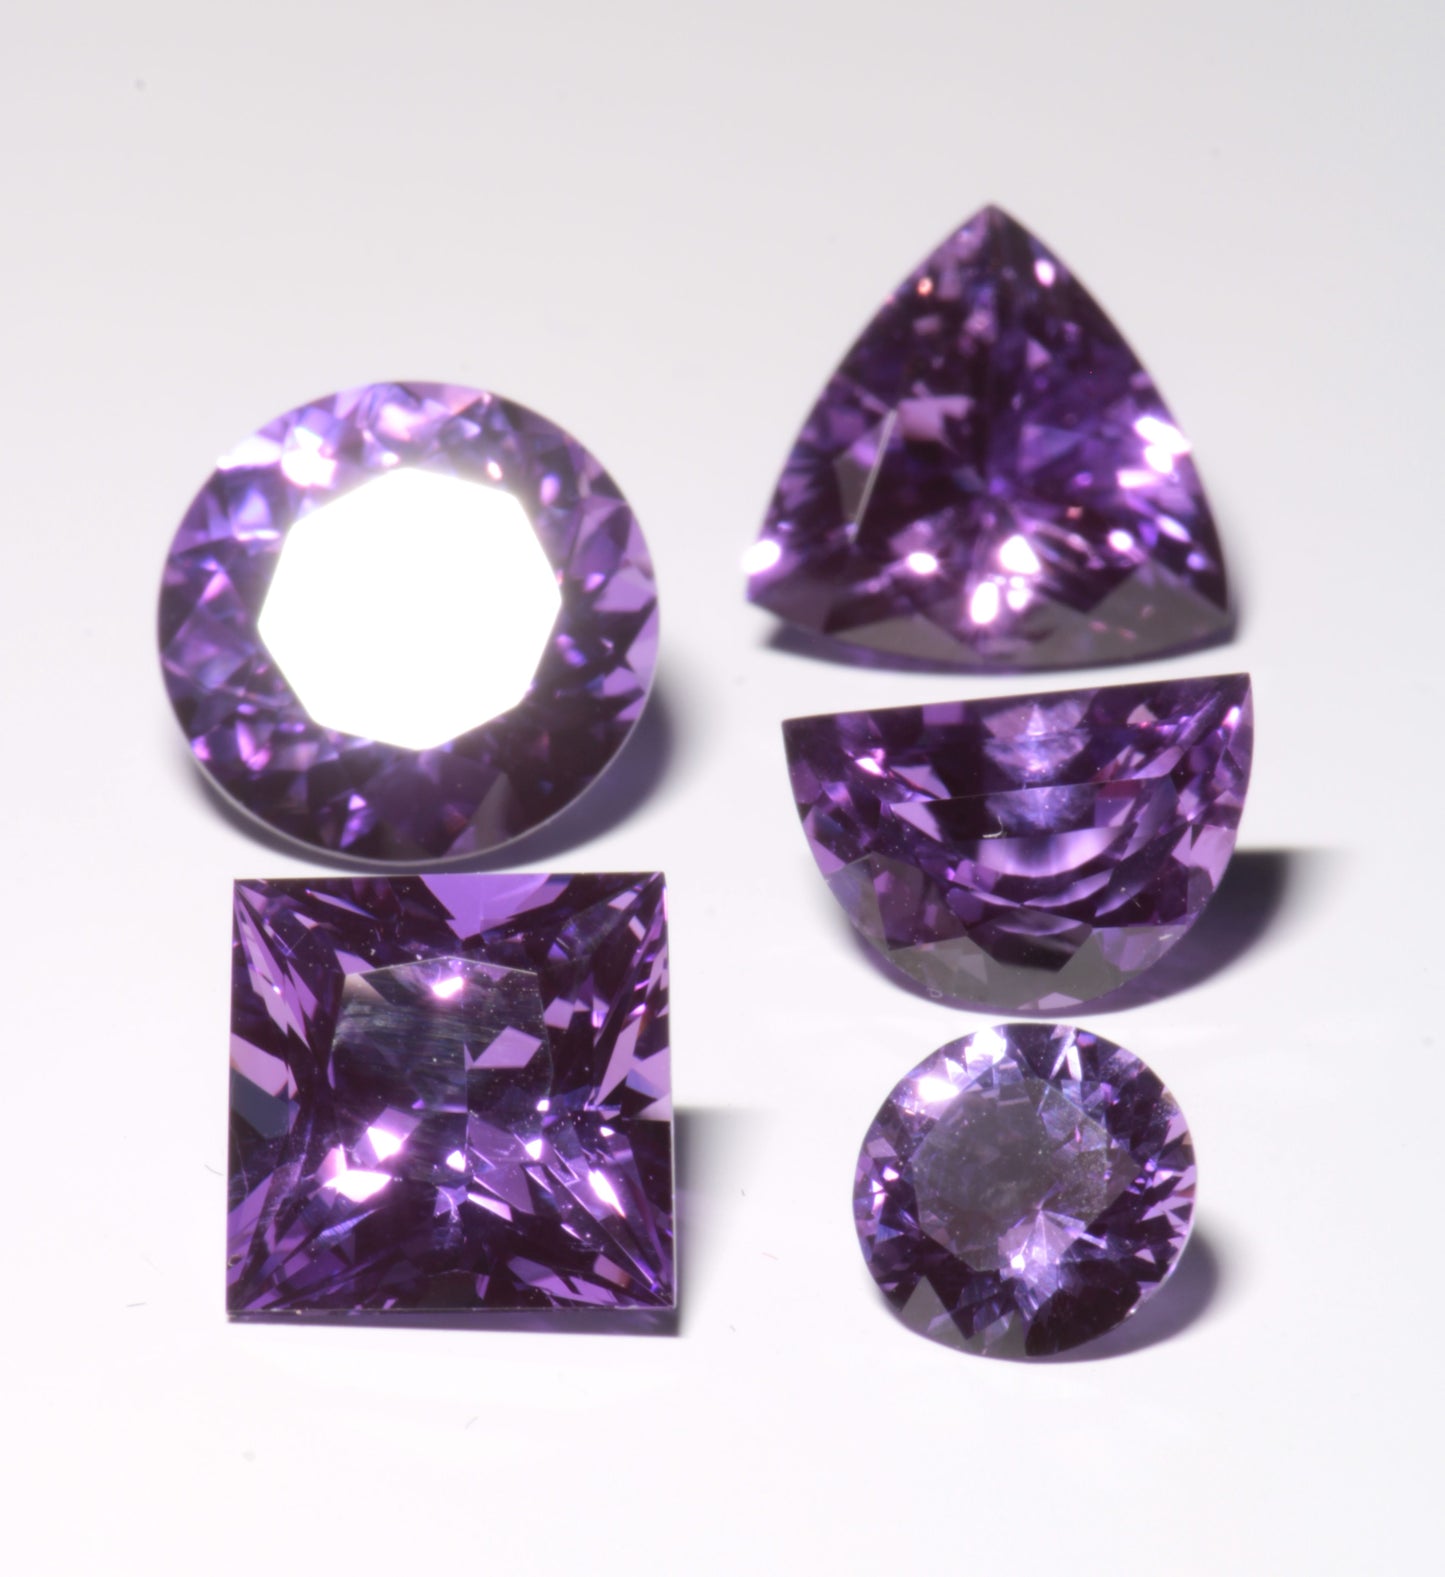 Purple Sapphire Loose Stones, Czochralski Grown Gems